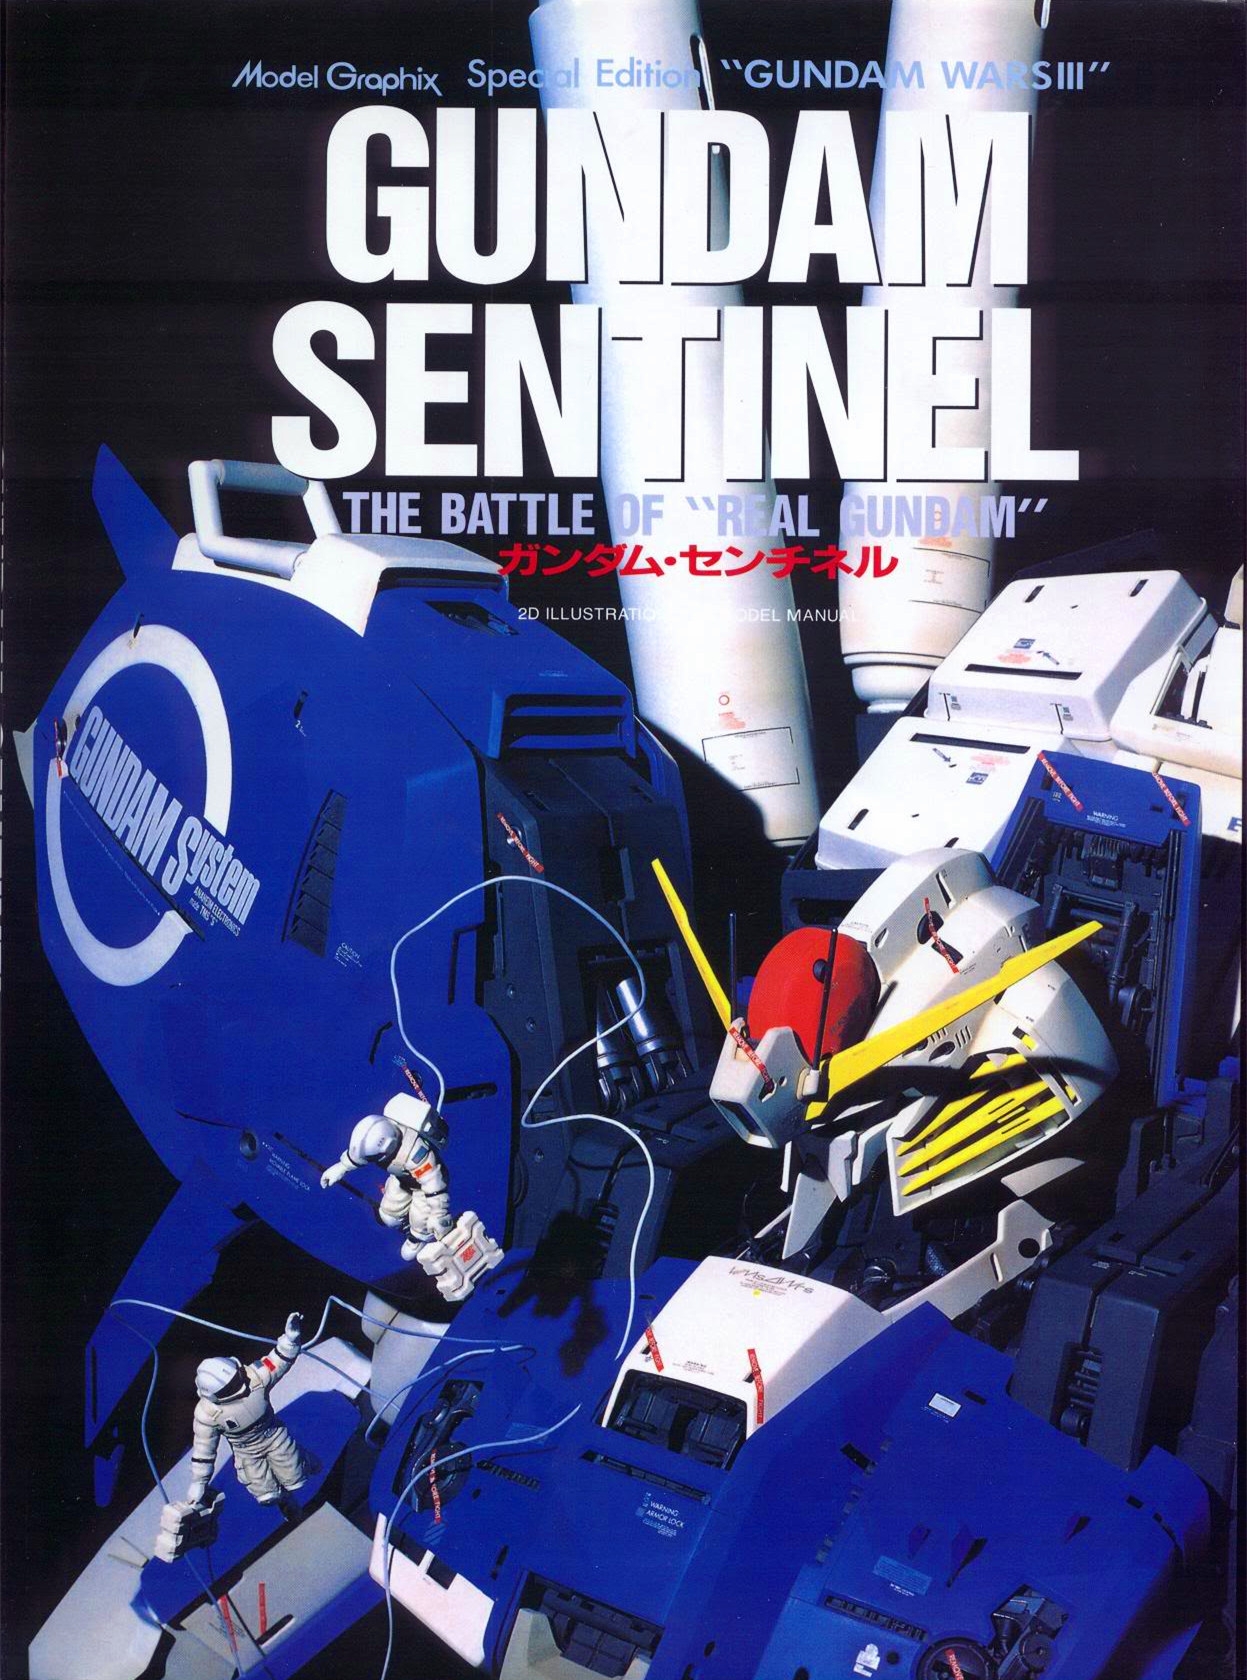 Model Graphix Special Edition - Gundam Wars III - Gundam Sentinel 0